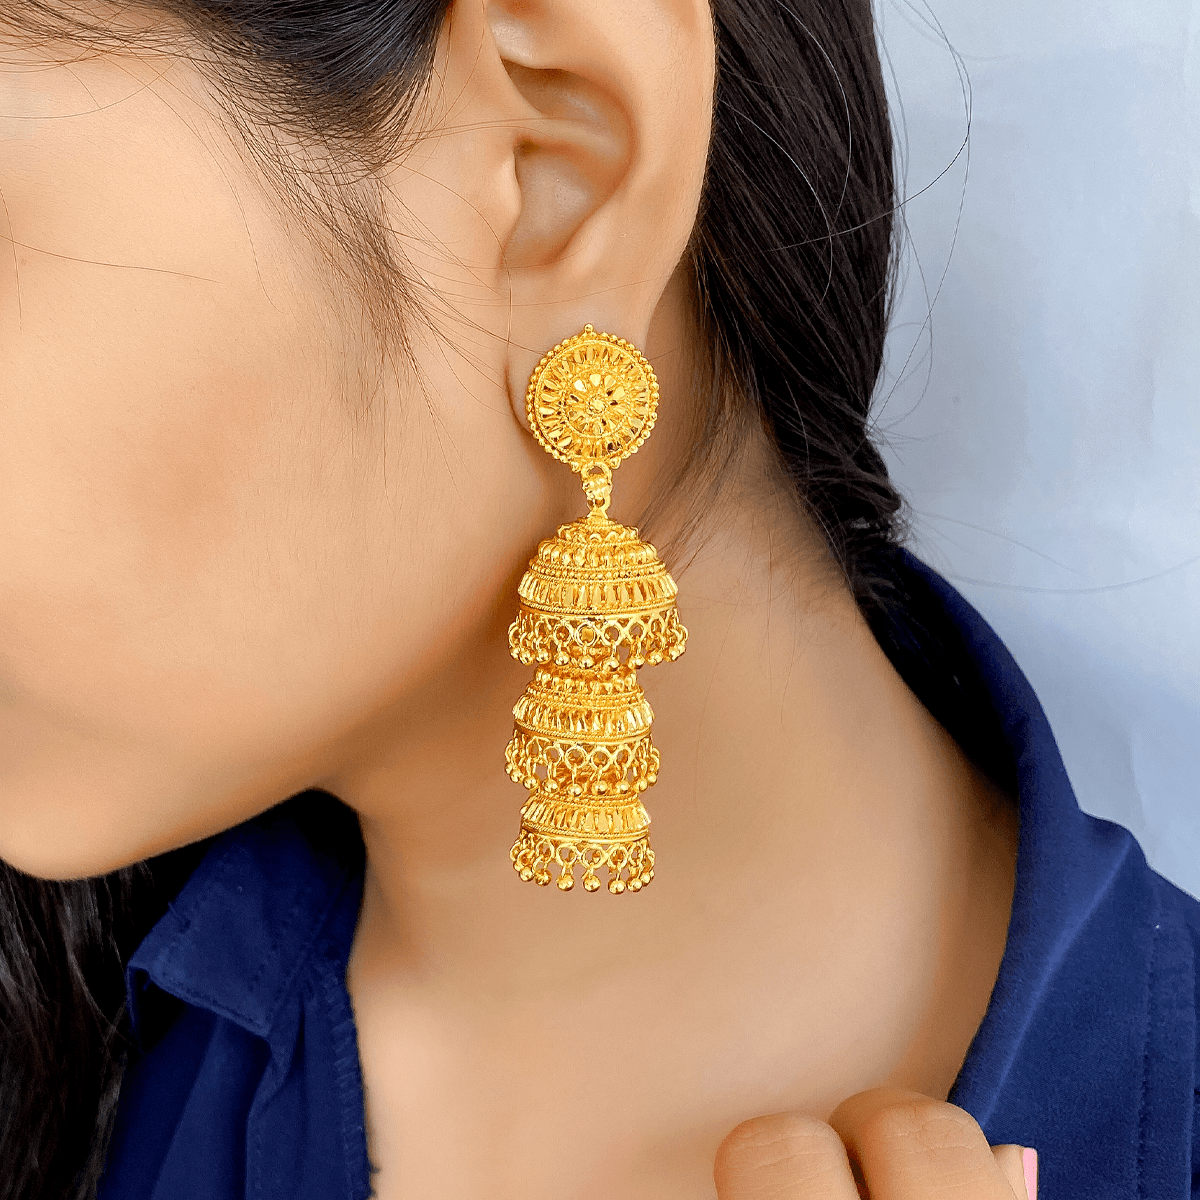 Gold Plated Jhumki Earrings